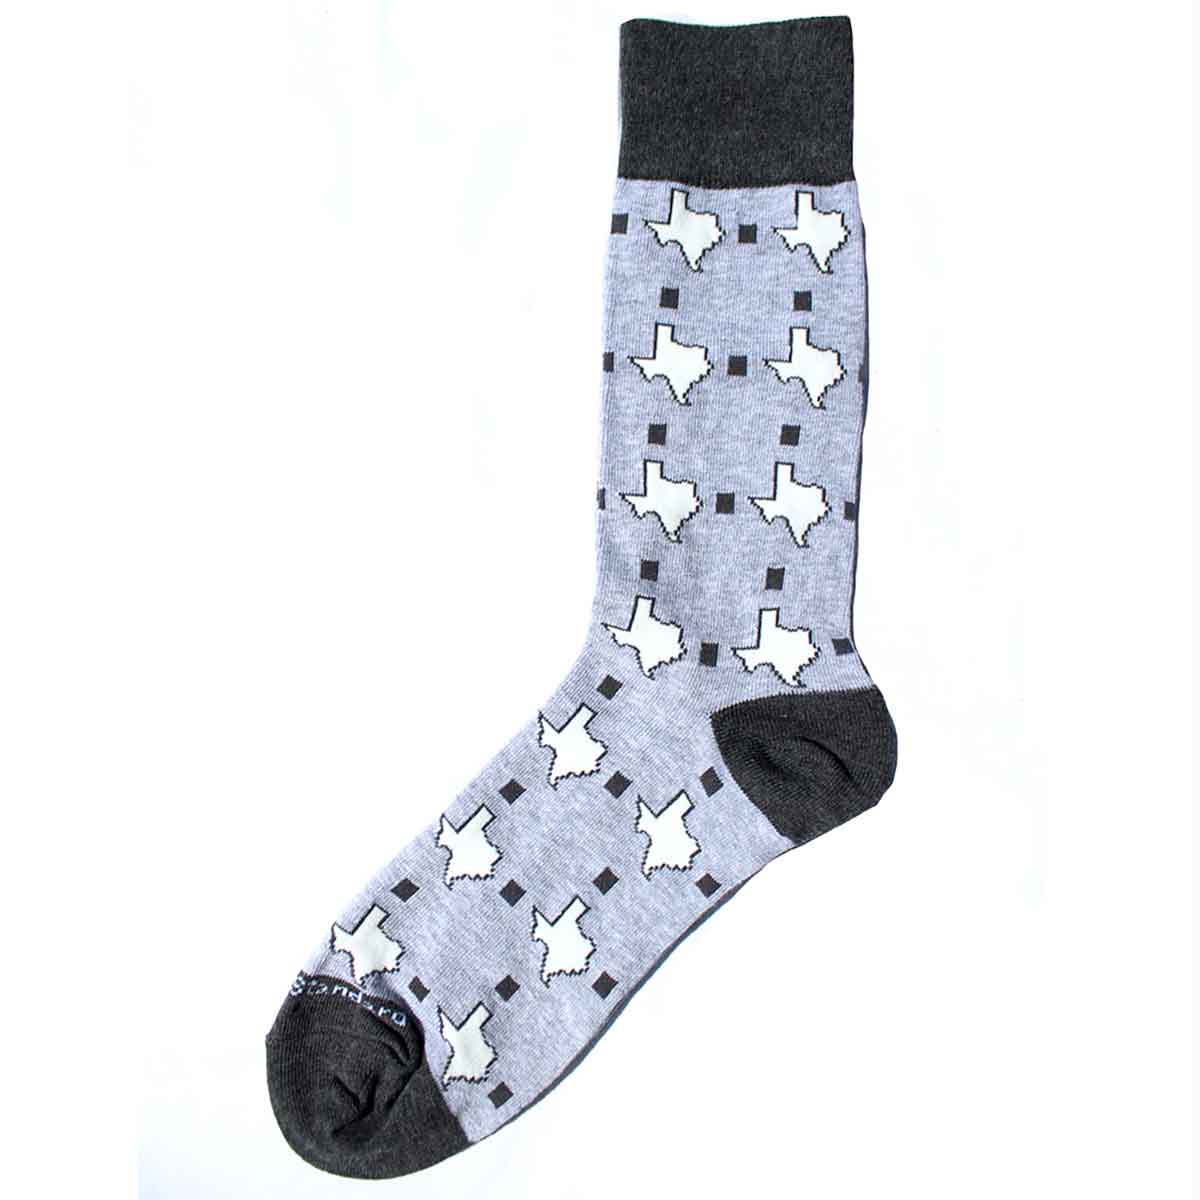 Men's Texas Pride Socks   Gray/White   One Size